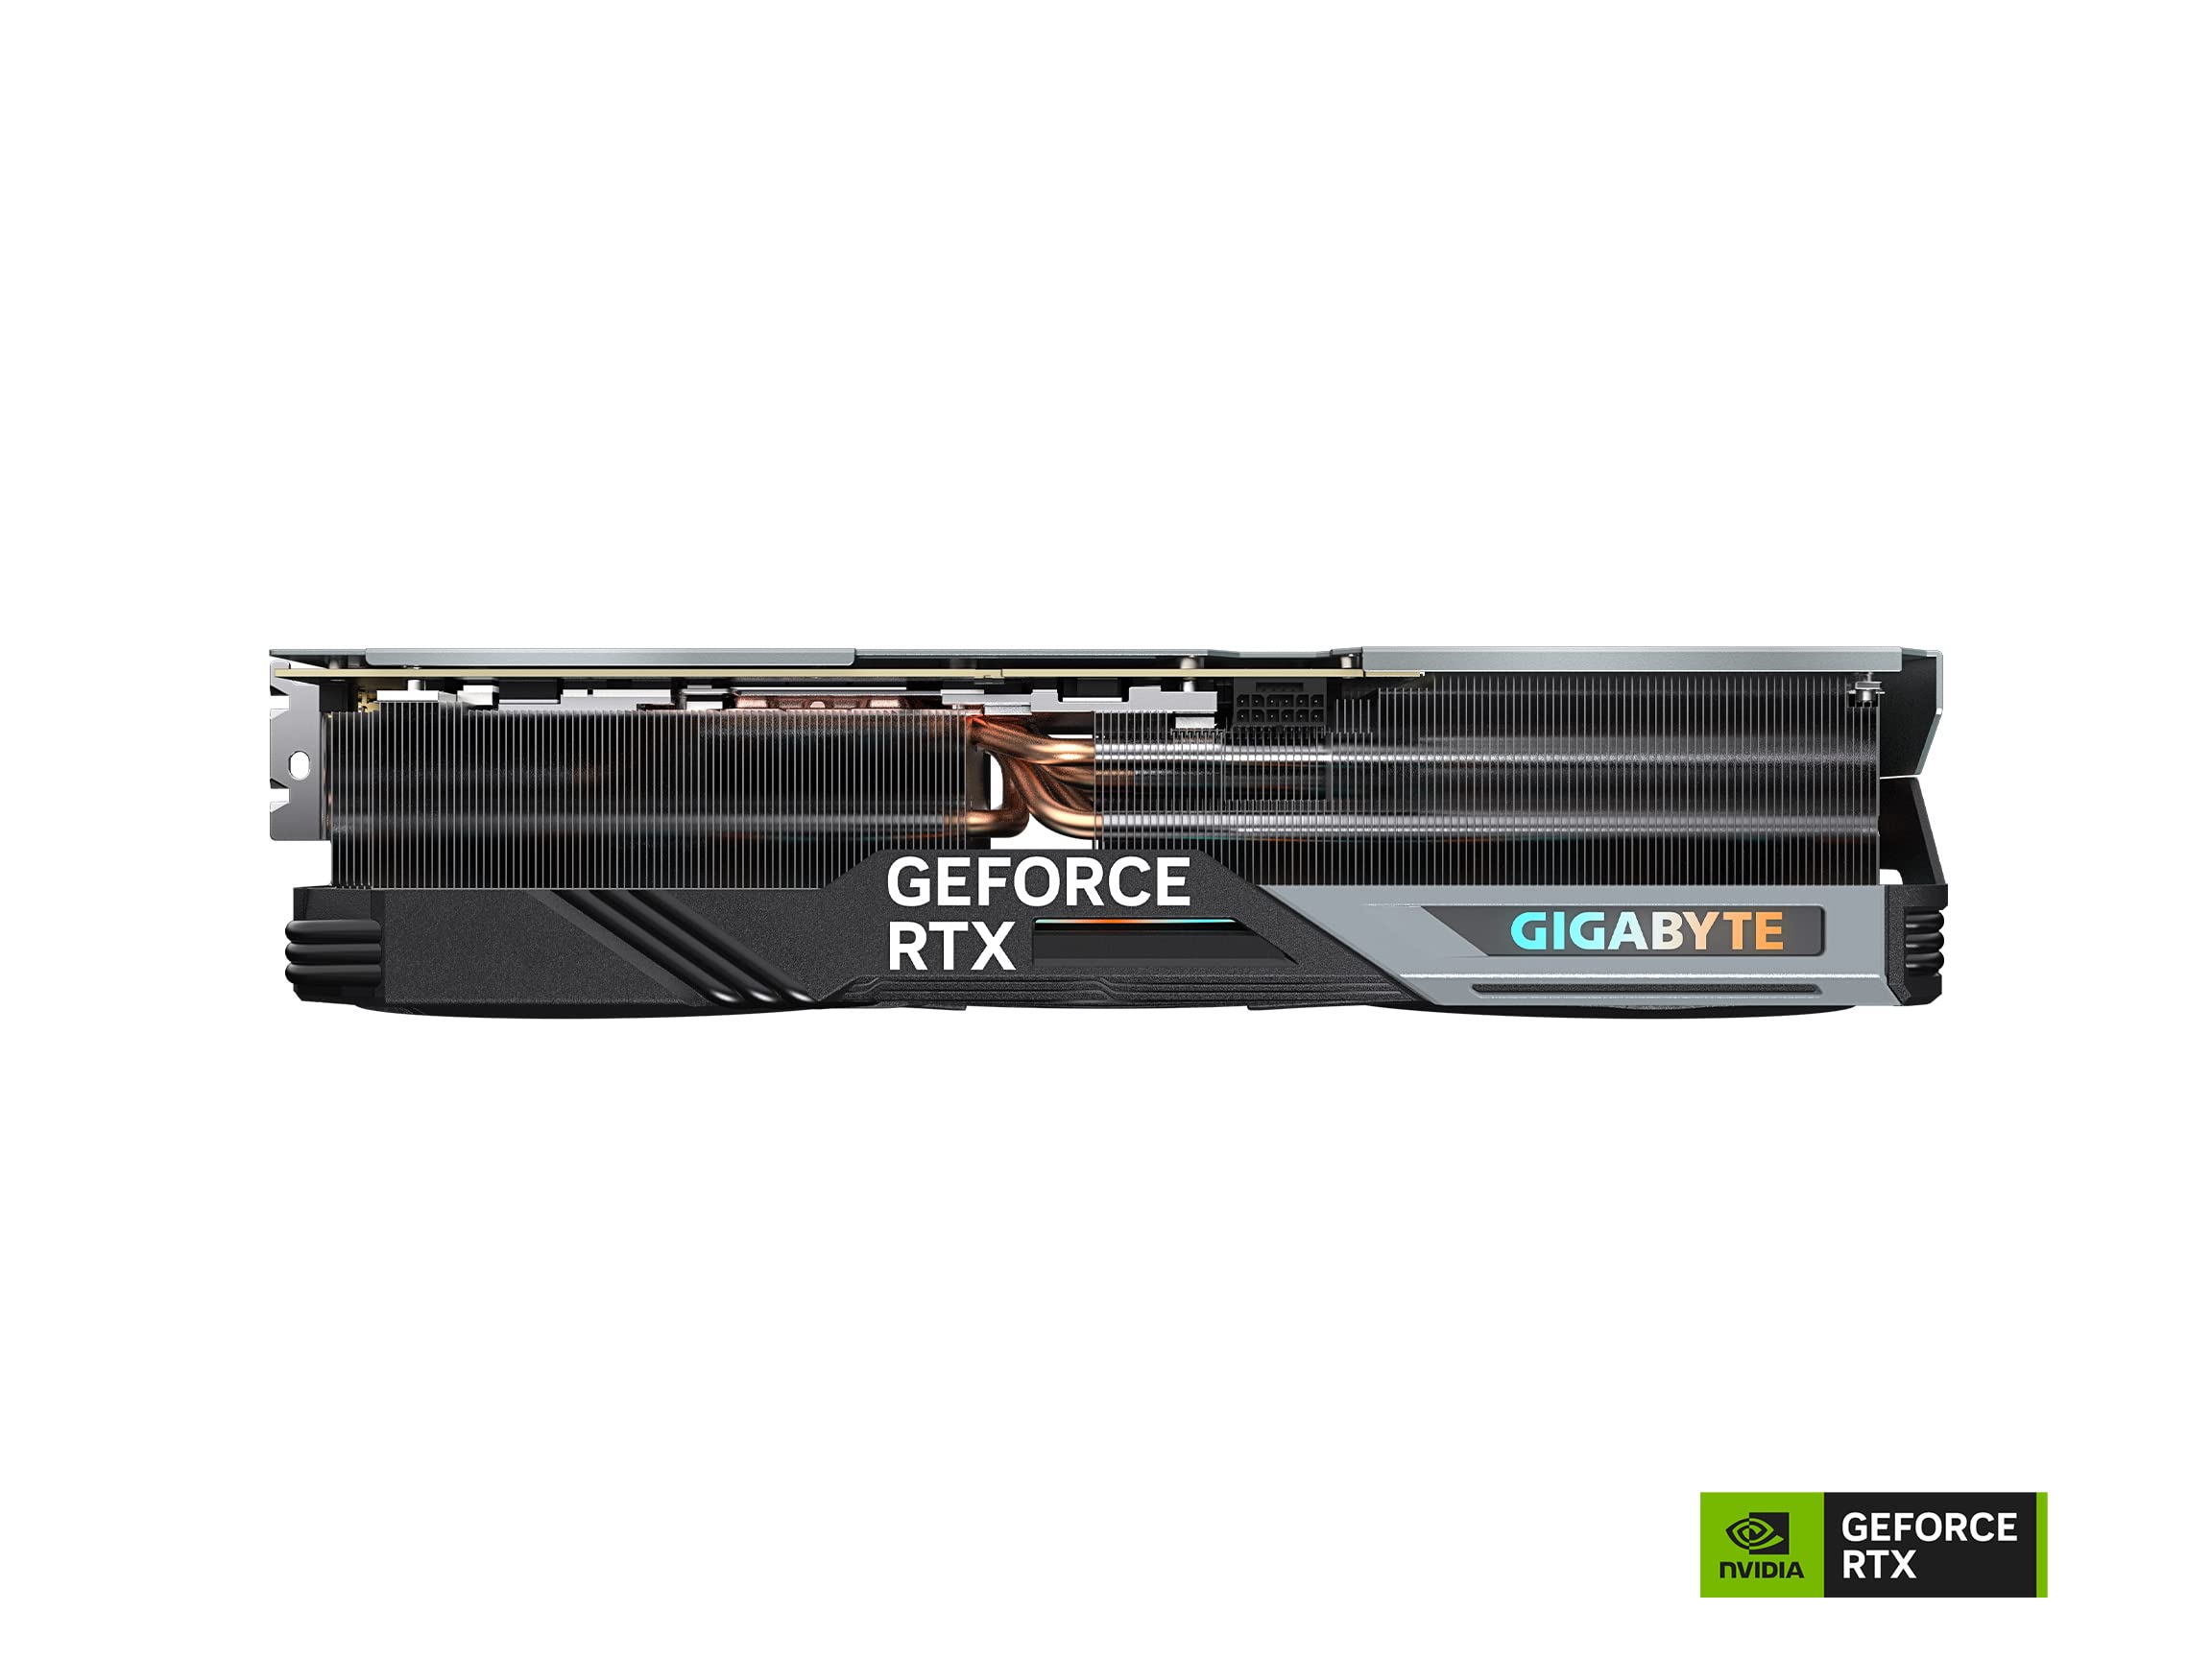 Gigabyte GeForce RTX 4090 Gaming OC 24G Graphics Card, 3X WINDFORCE Fans, 24GB 384-bit GDDR6X, GV-N4090GAMING OC-24GD Video Card